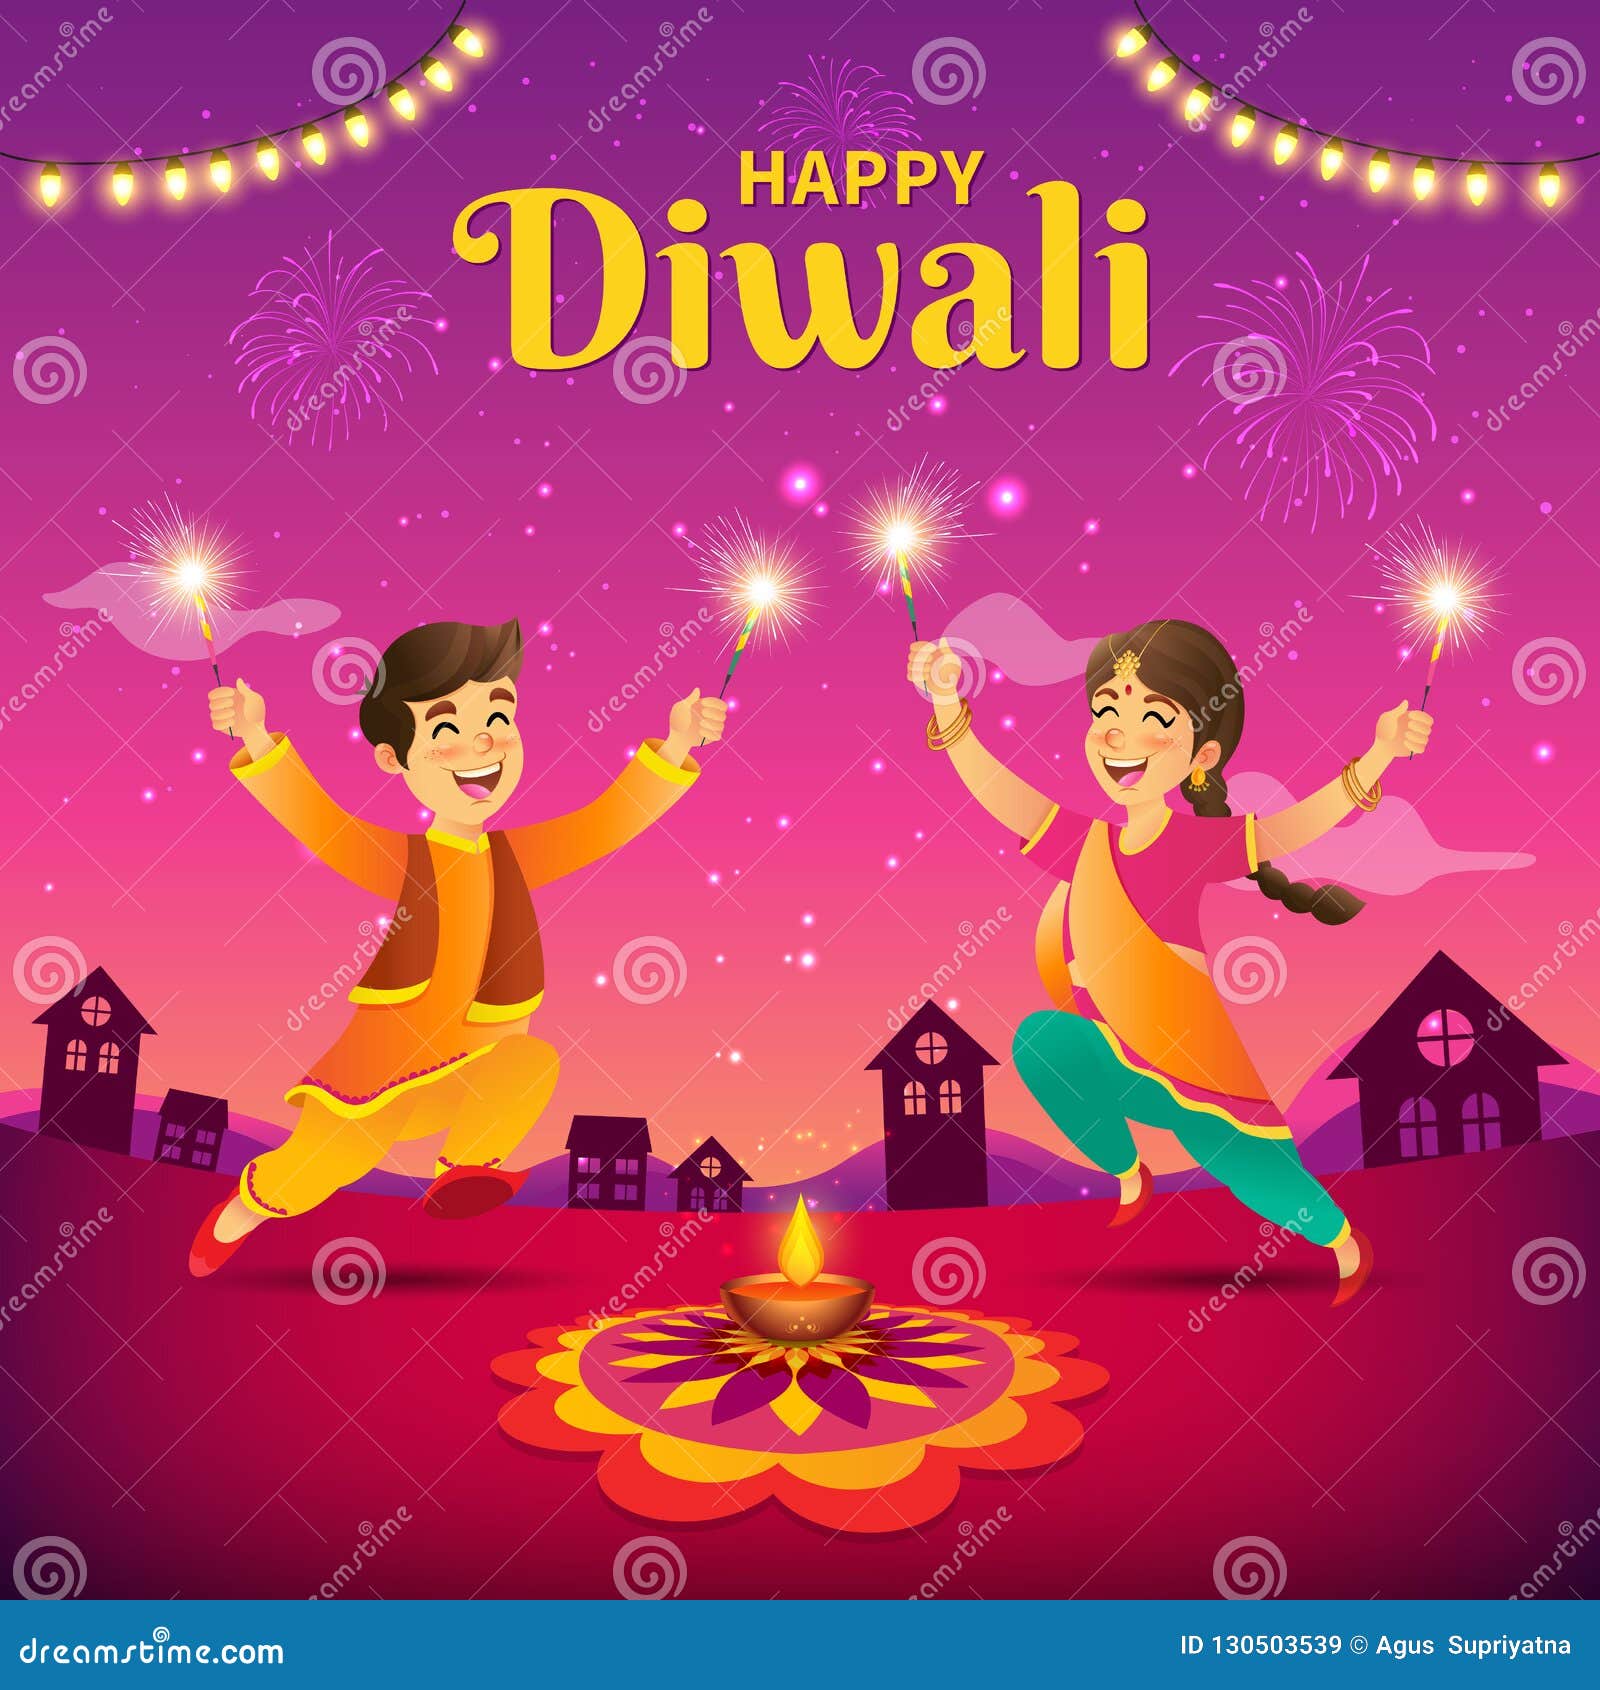 Diwali Greeting Card with Cartoon Indian Kids Stock Vector - Illustration  of indian, cartoon: 130503539